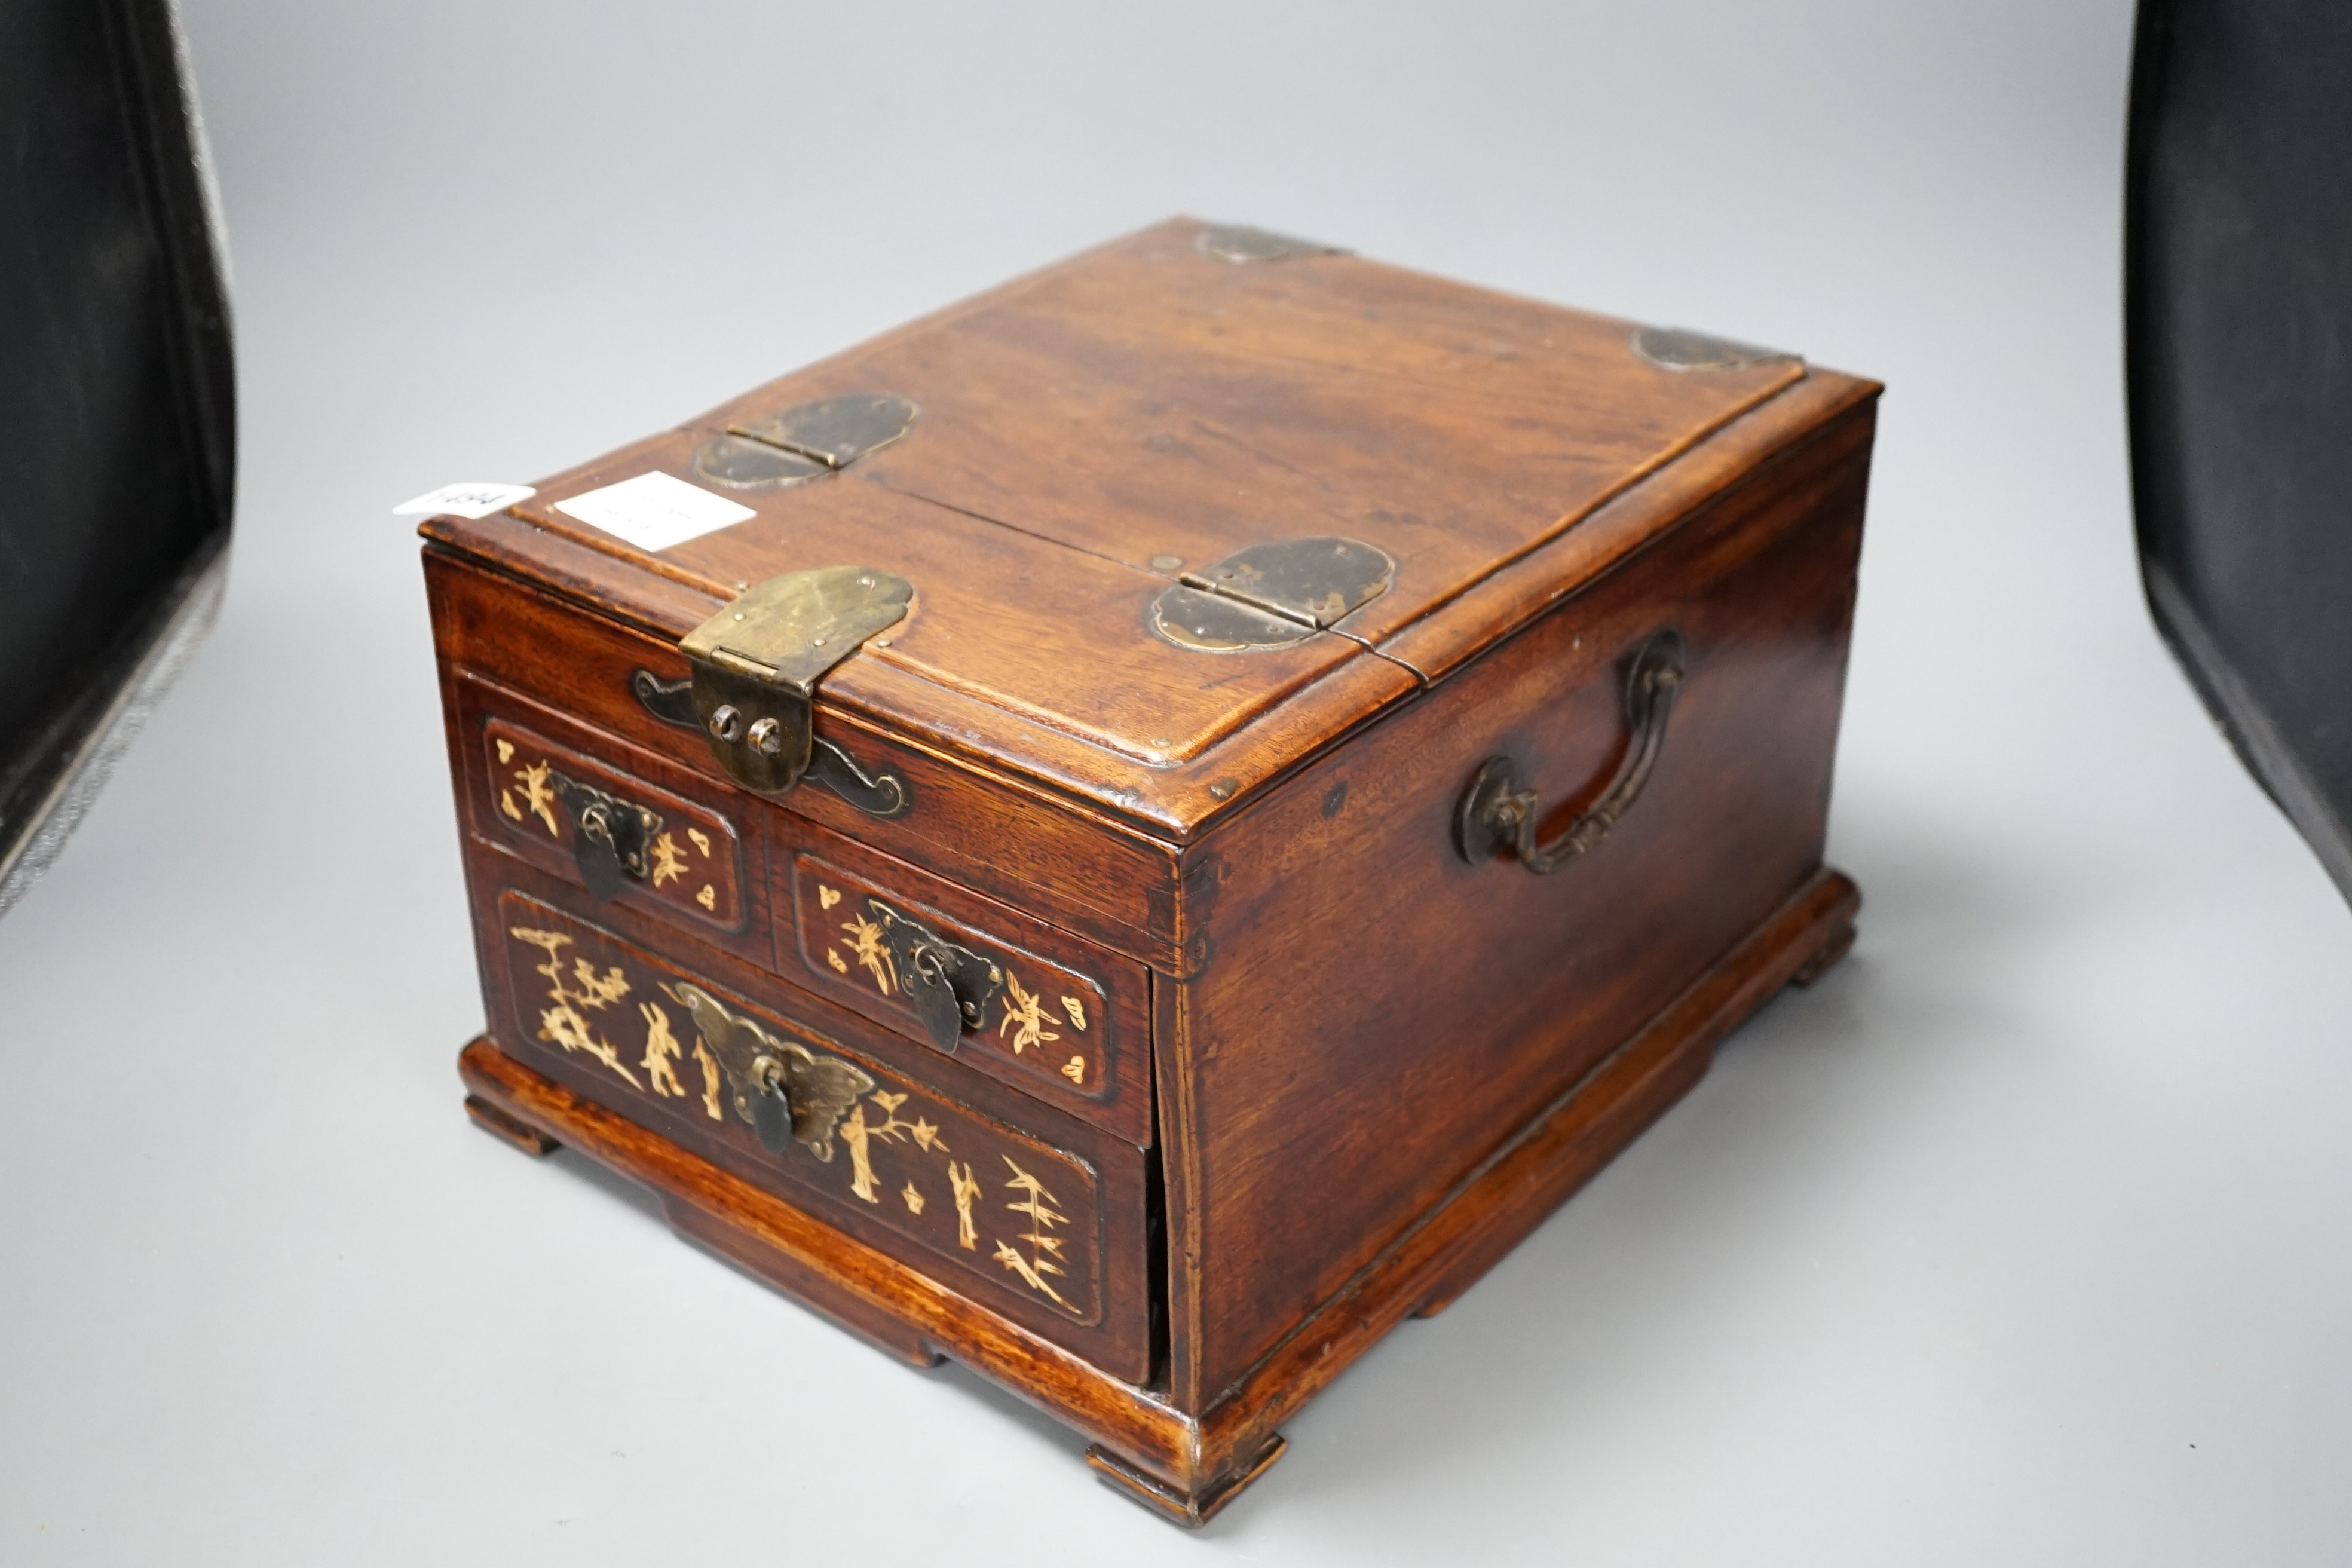 A late 19th century Chinese hardwood and bone inlaid jewellery box. 18.5cm tall